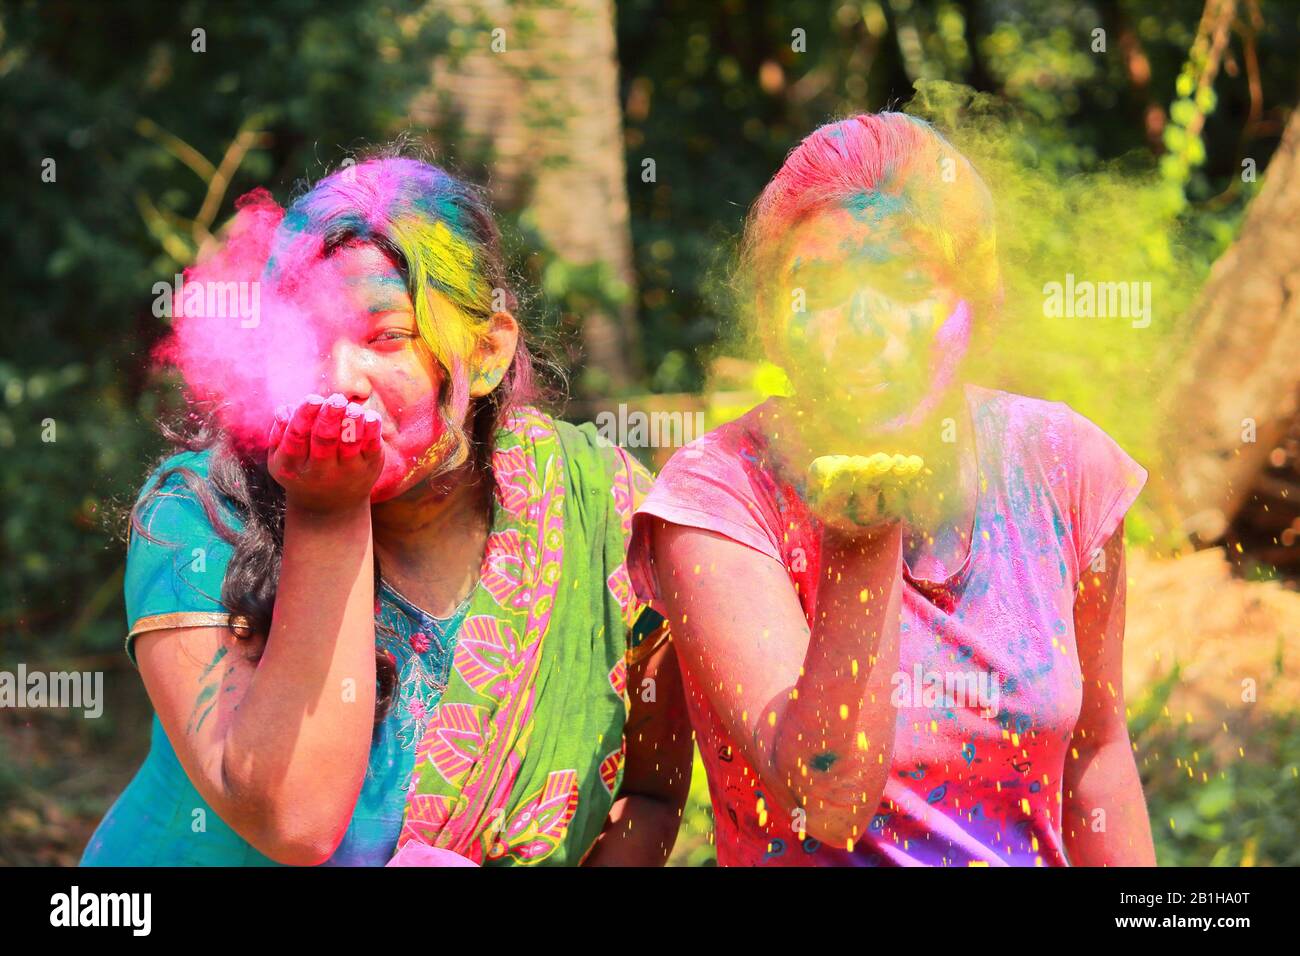 two young joyful girls celebrate holi festival with colorful abir in kolkata, west bengal, india Stock Photo